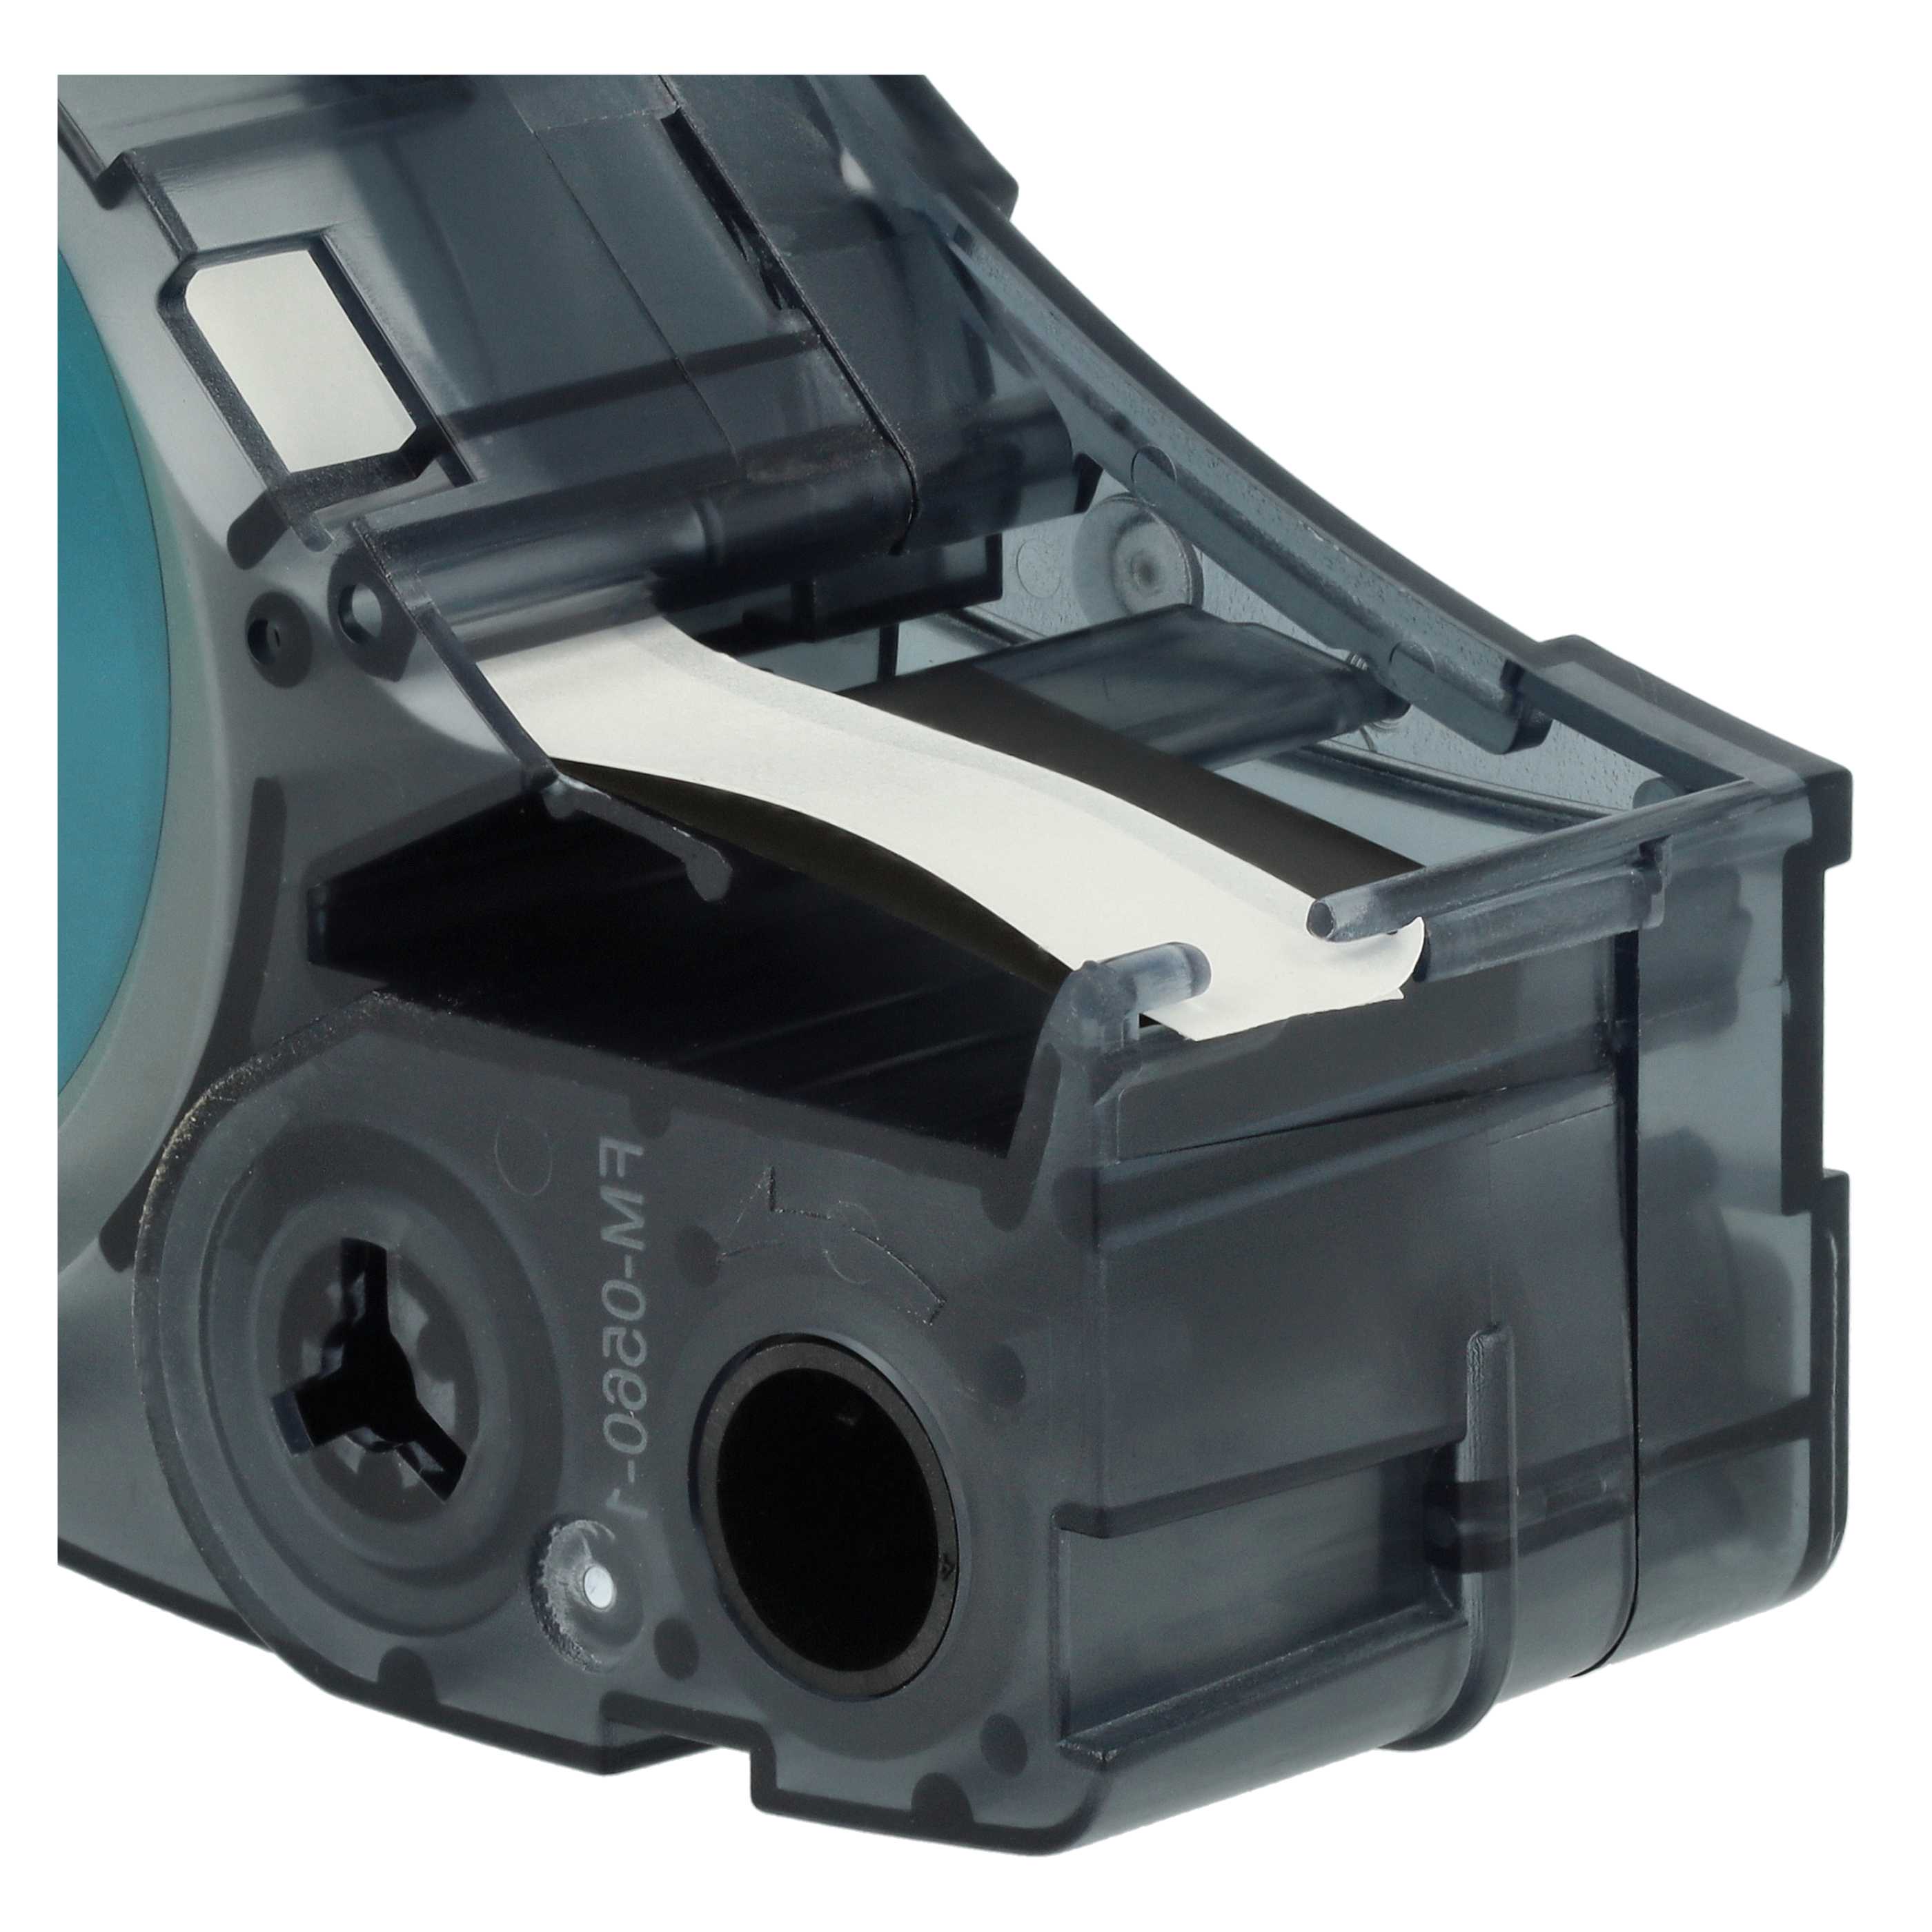 5x Cassetta nastro sostituisce Brady M21-375-7425 per etichettatrice Brady 9,5mm nero su bianco, polipropilene